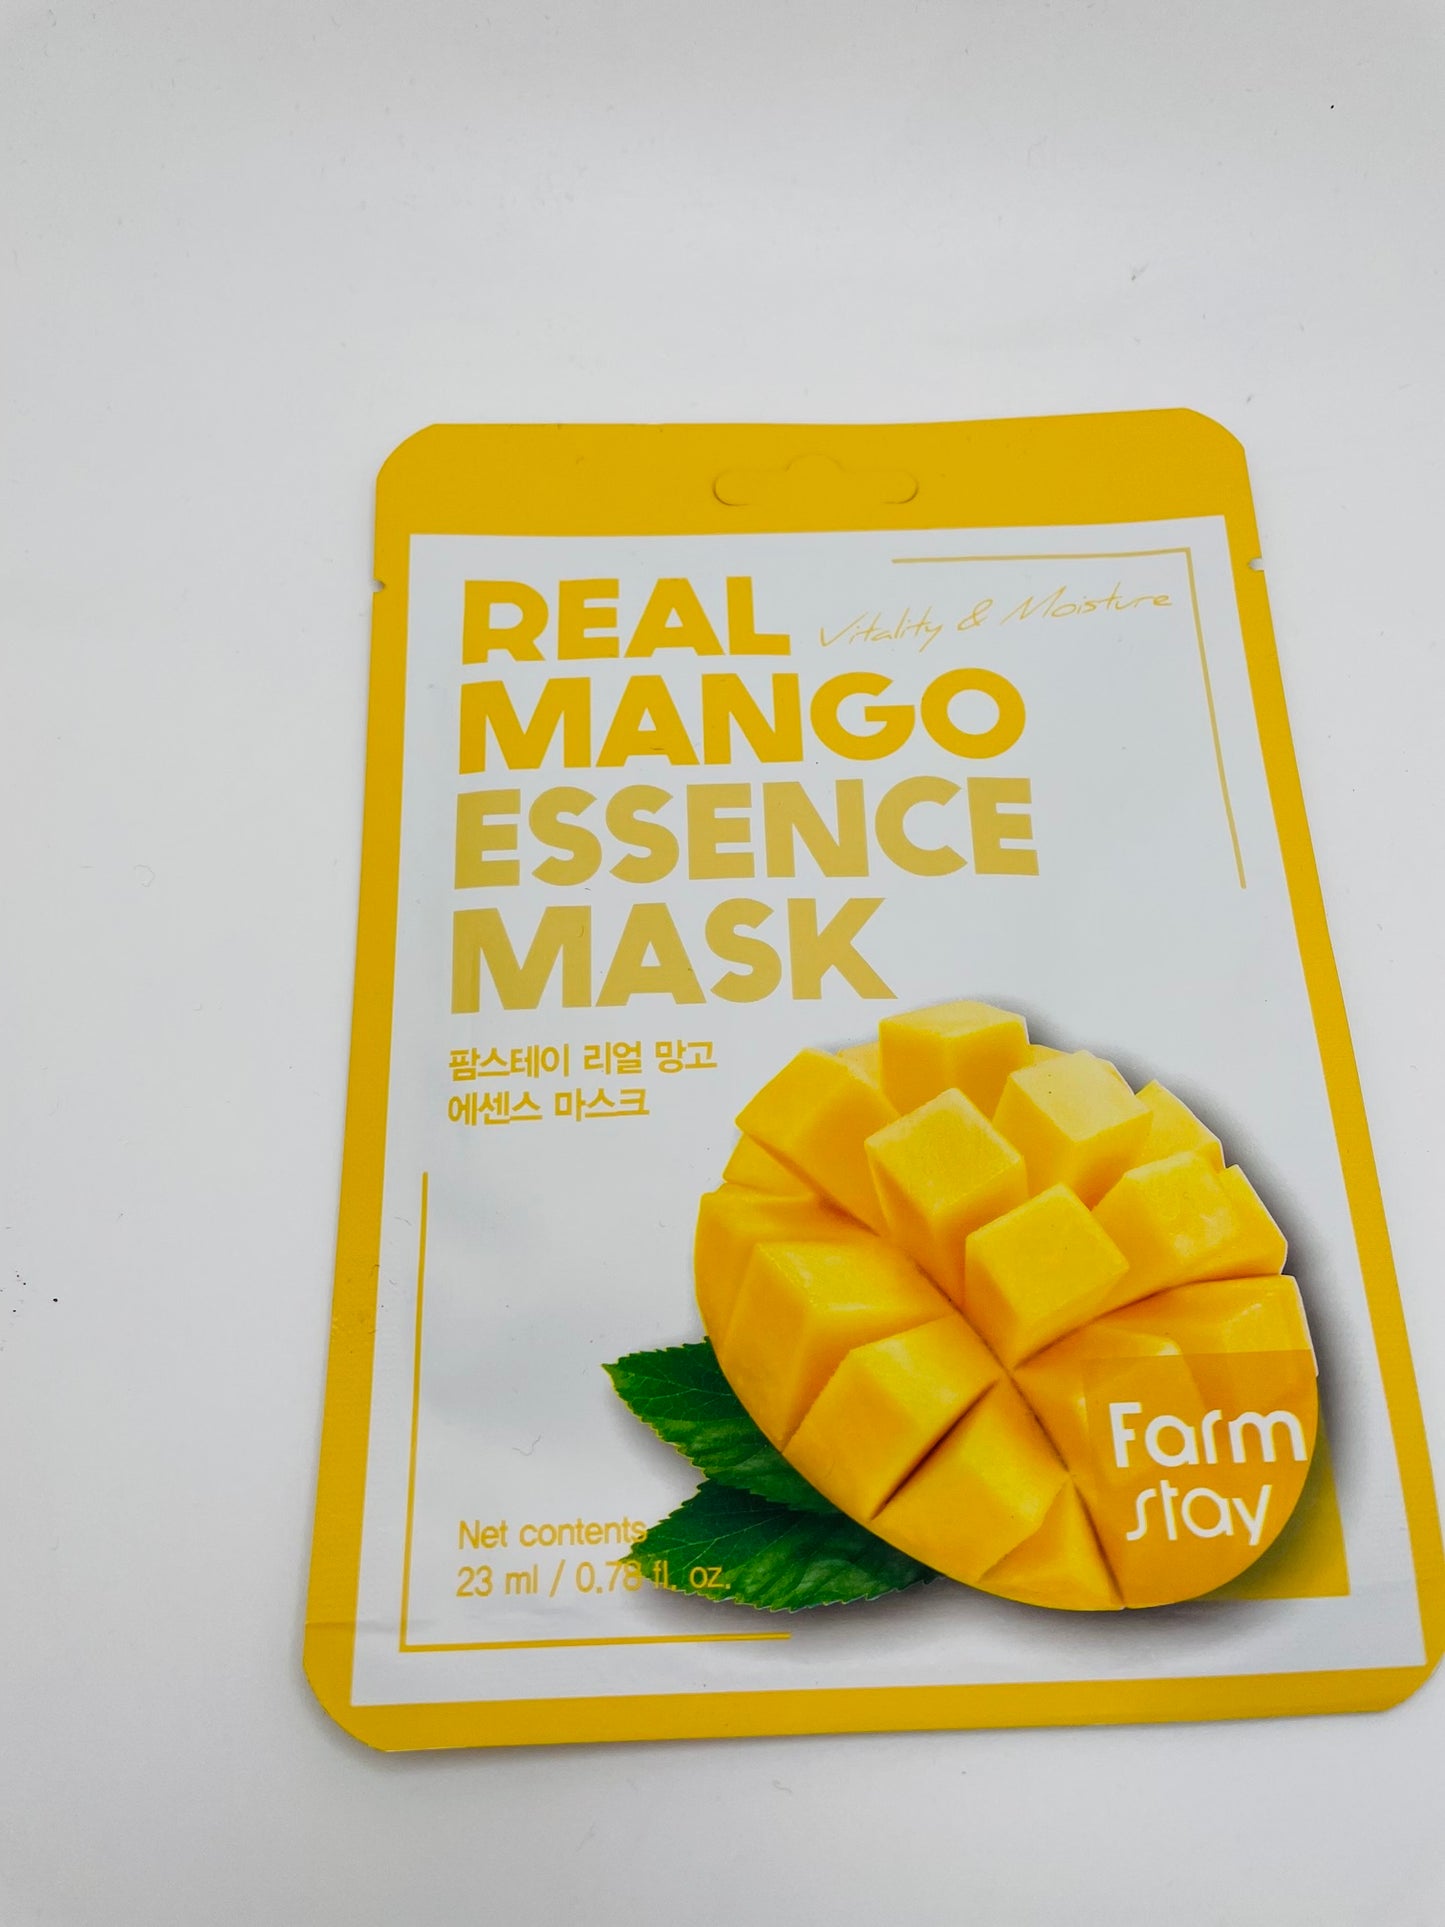 Deal mango face mask